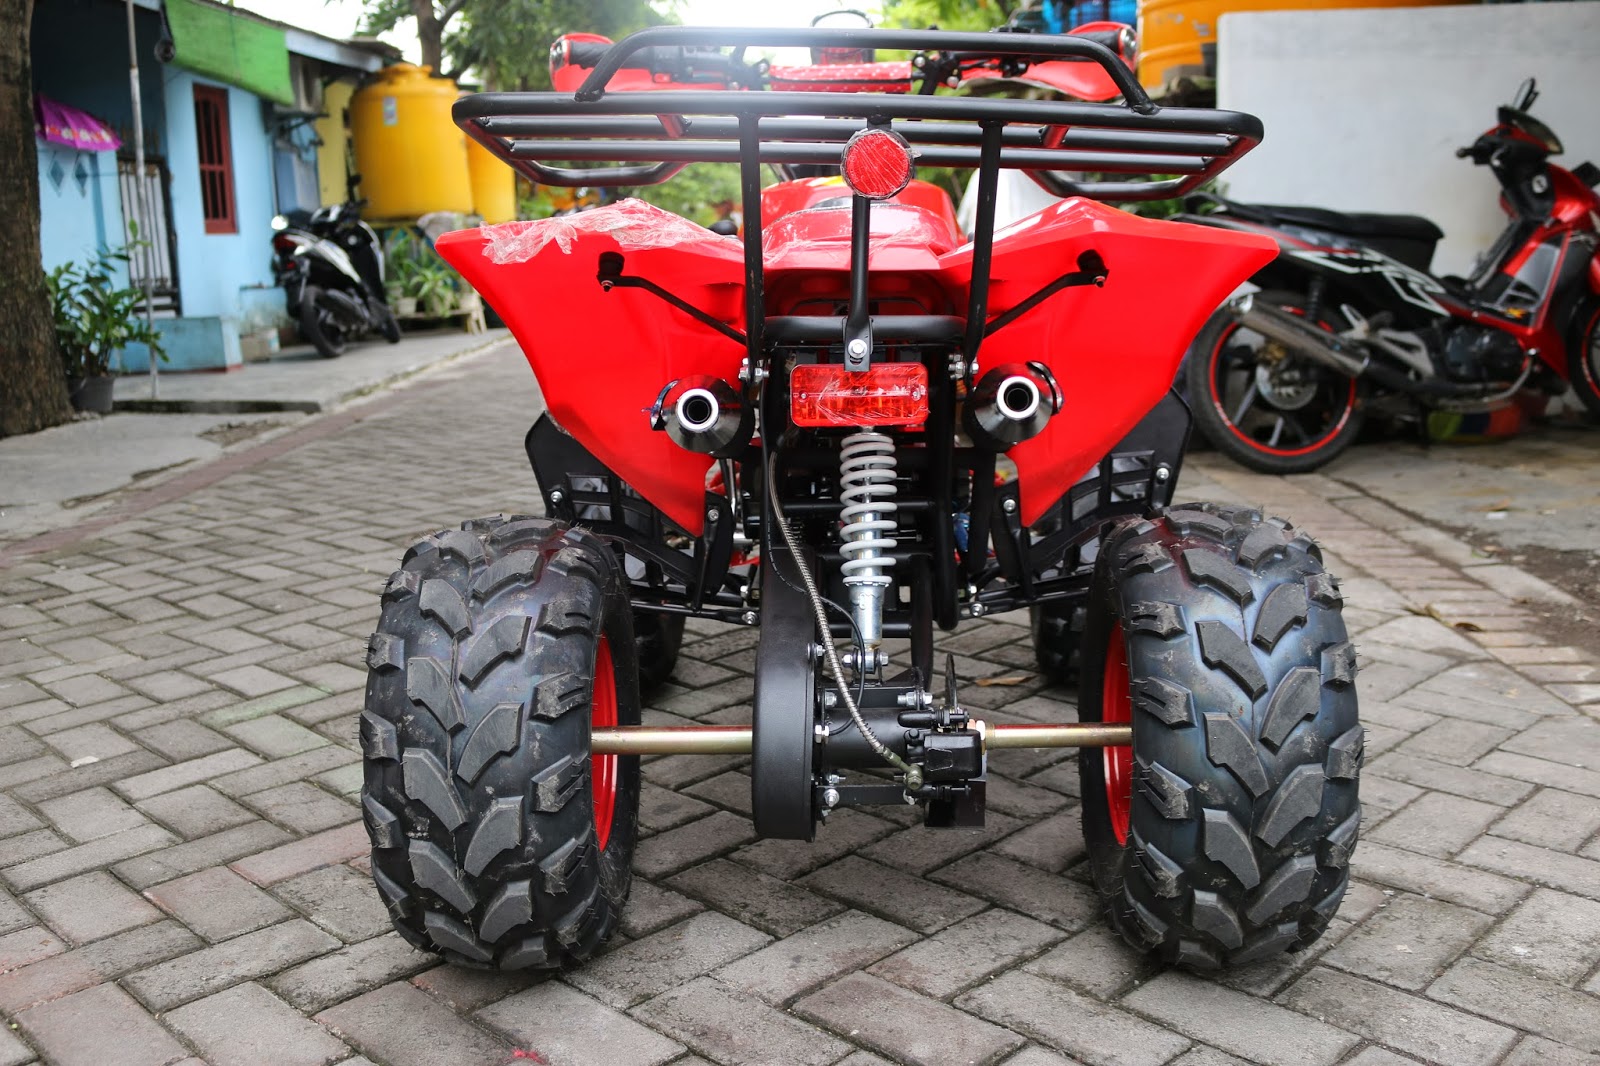  MOTOR  ATV ROMCA 110 CC MURAH  SURABAYA  ELEKTRIK SCOOTER 